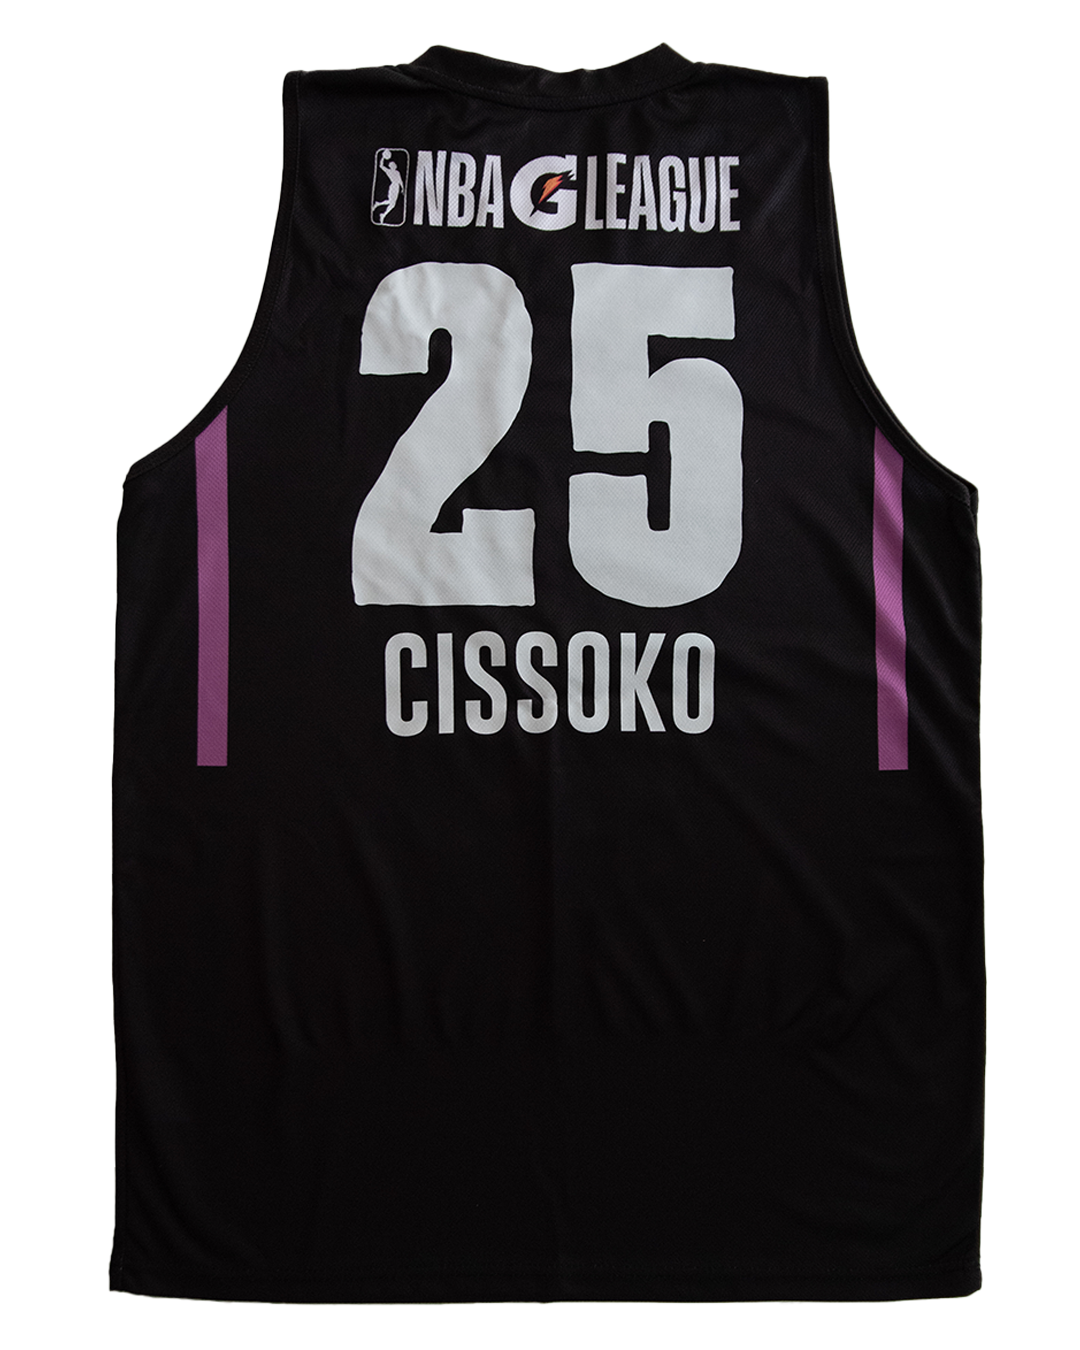 Minnesota Timberwolves ROSE#25 Black And Purple NBA Jersey